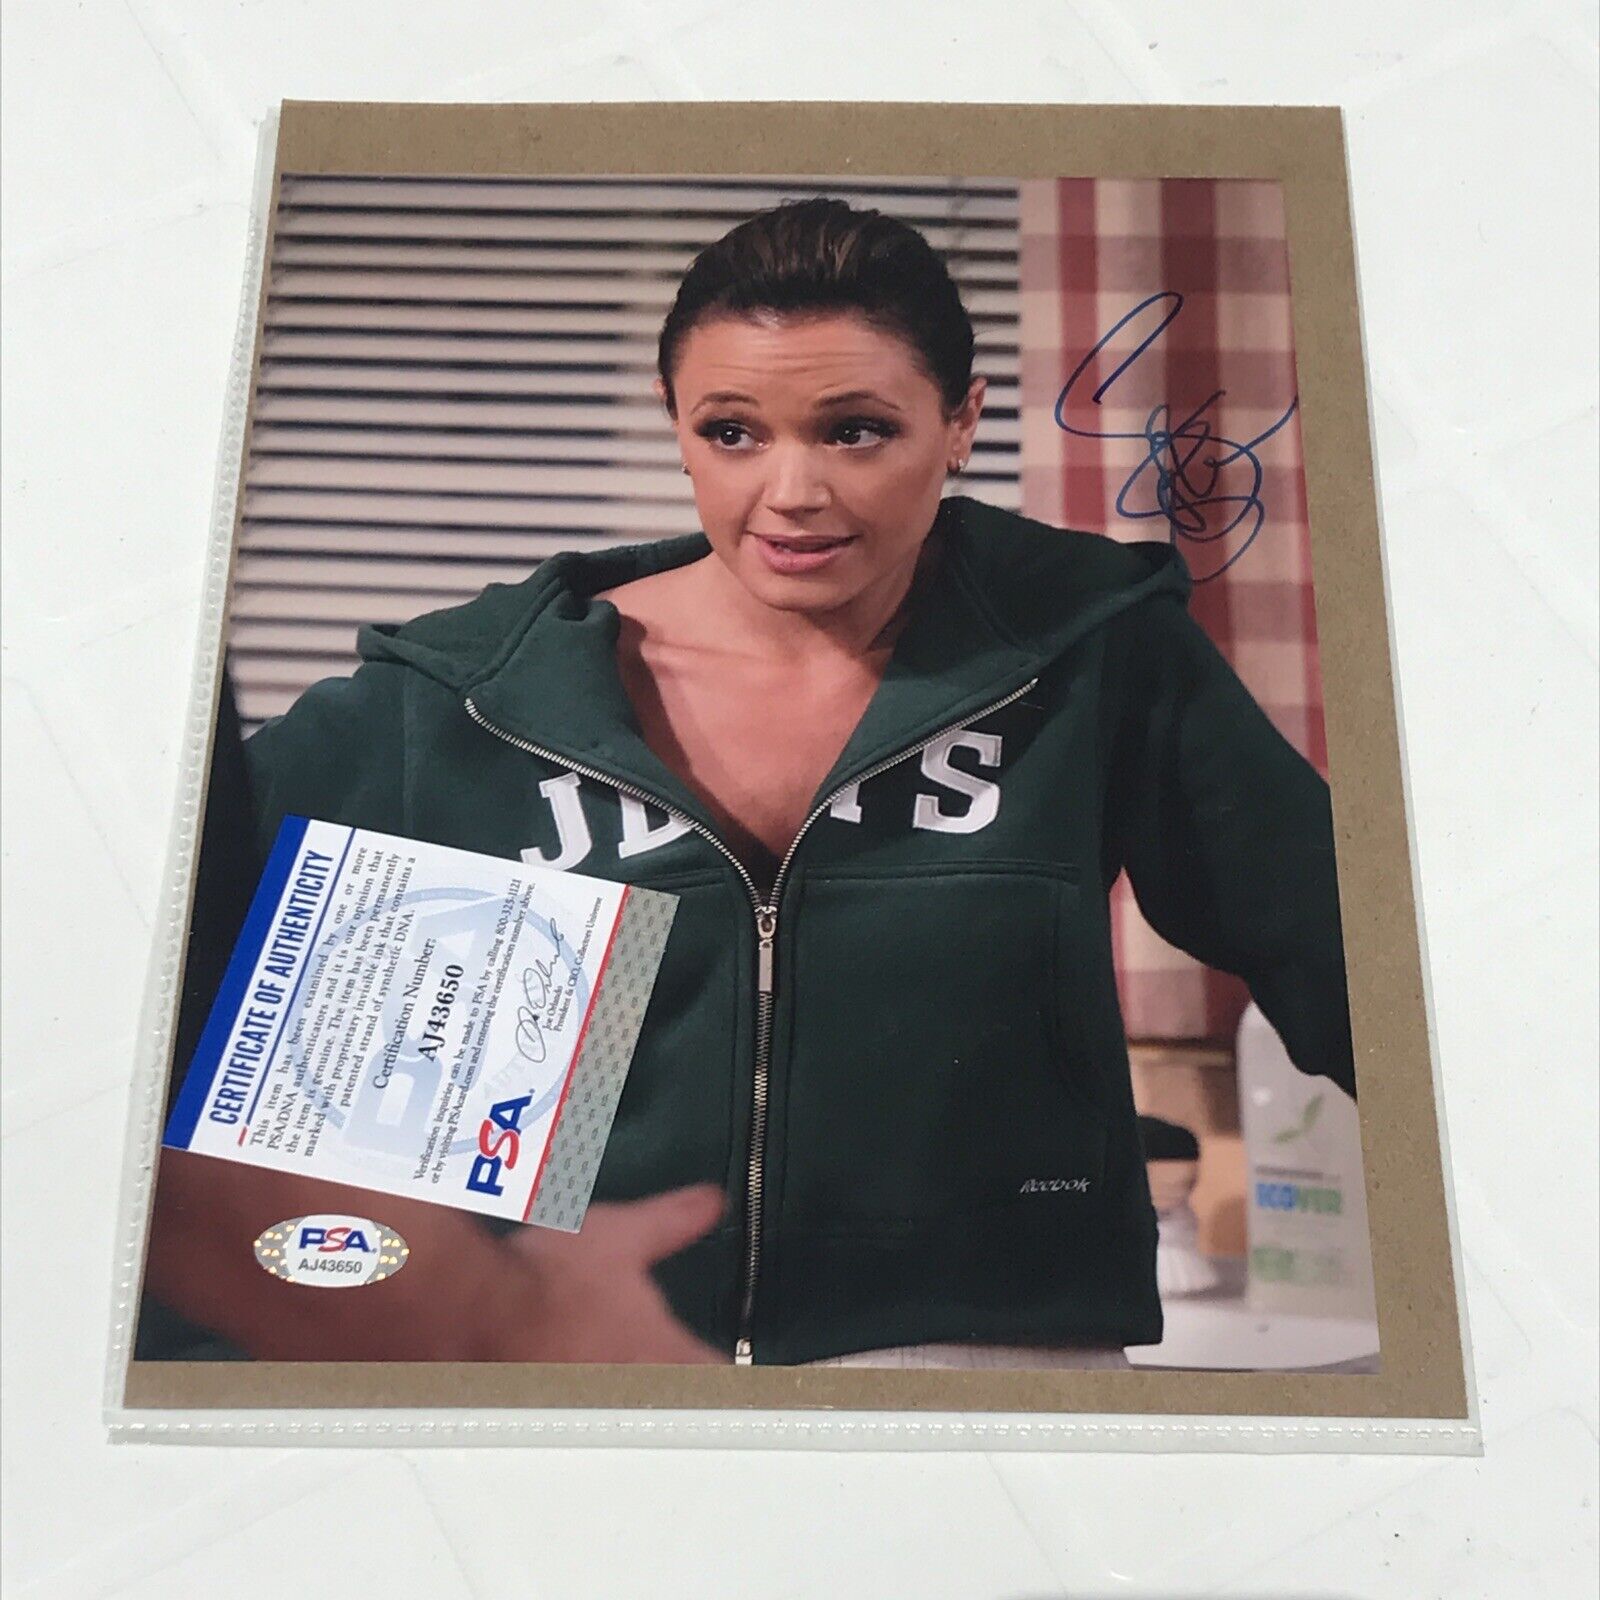 PSA DNA Certified Authentic Leah Remini signed/autograp​hed 8x10 Color Photo